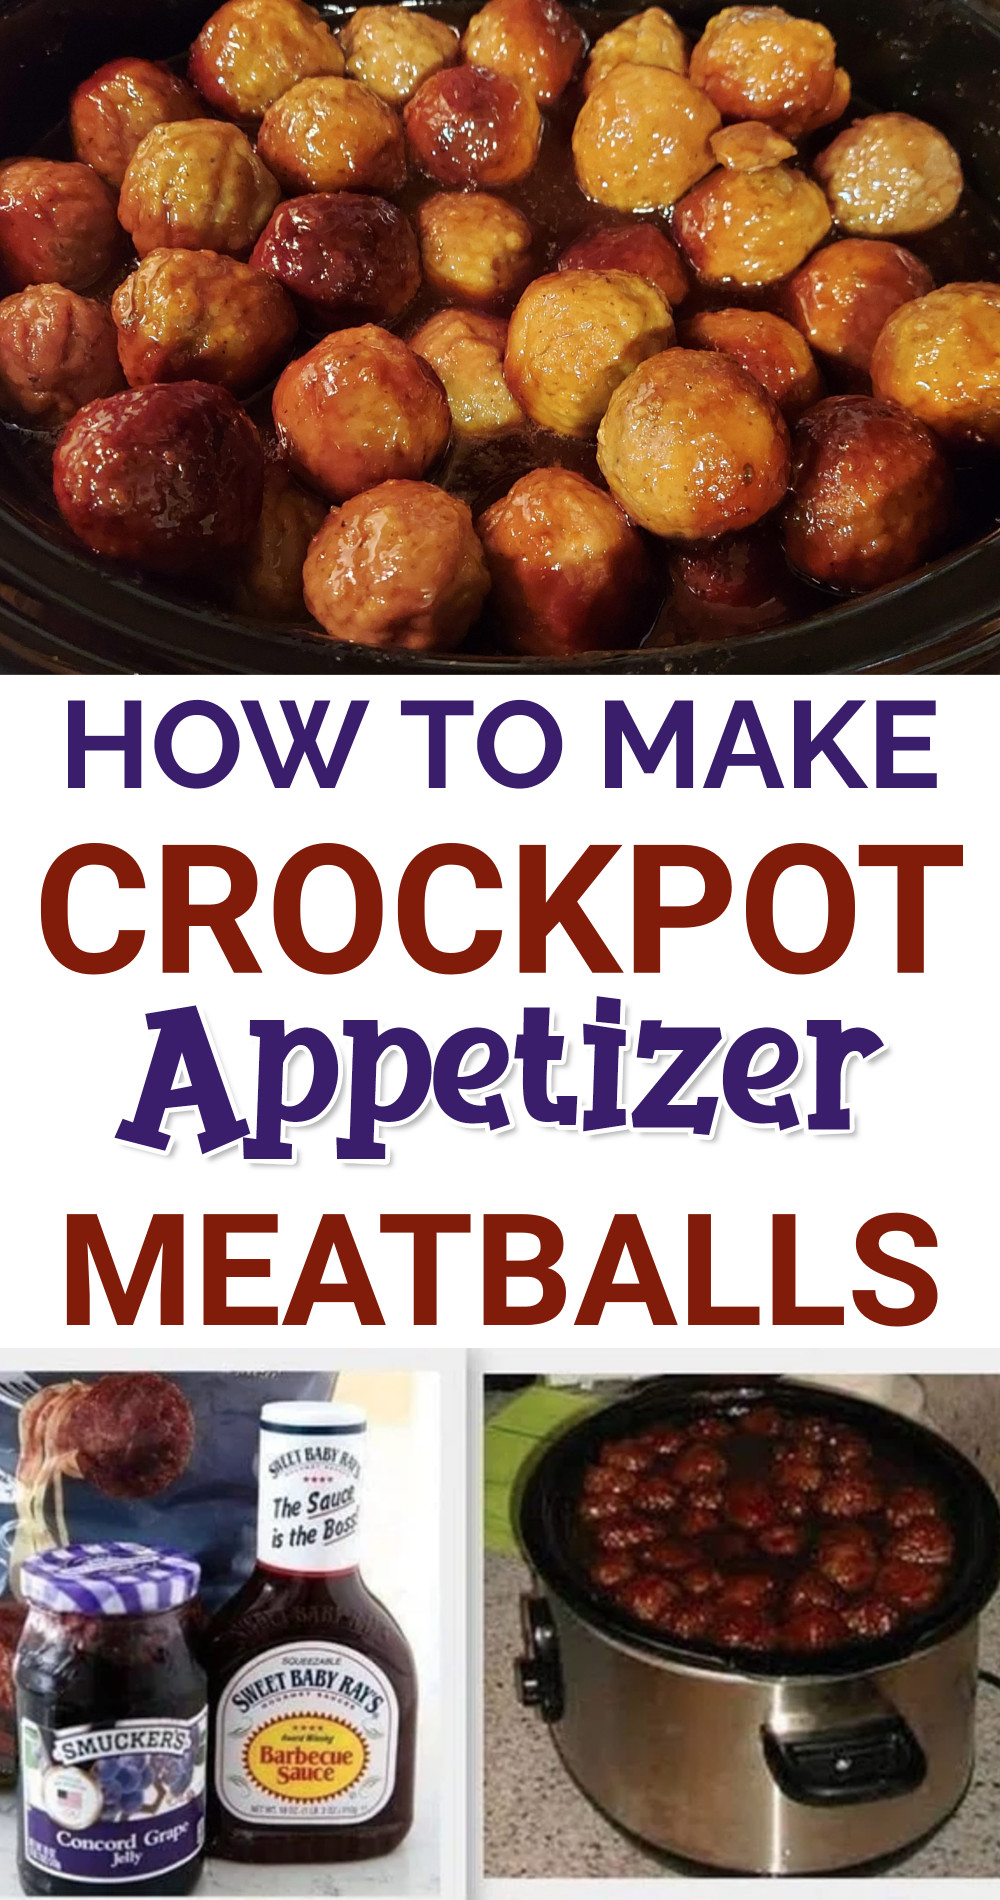 Crockpot appetizer meatballs